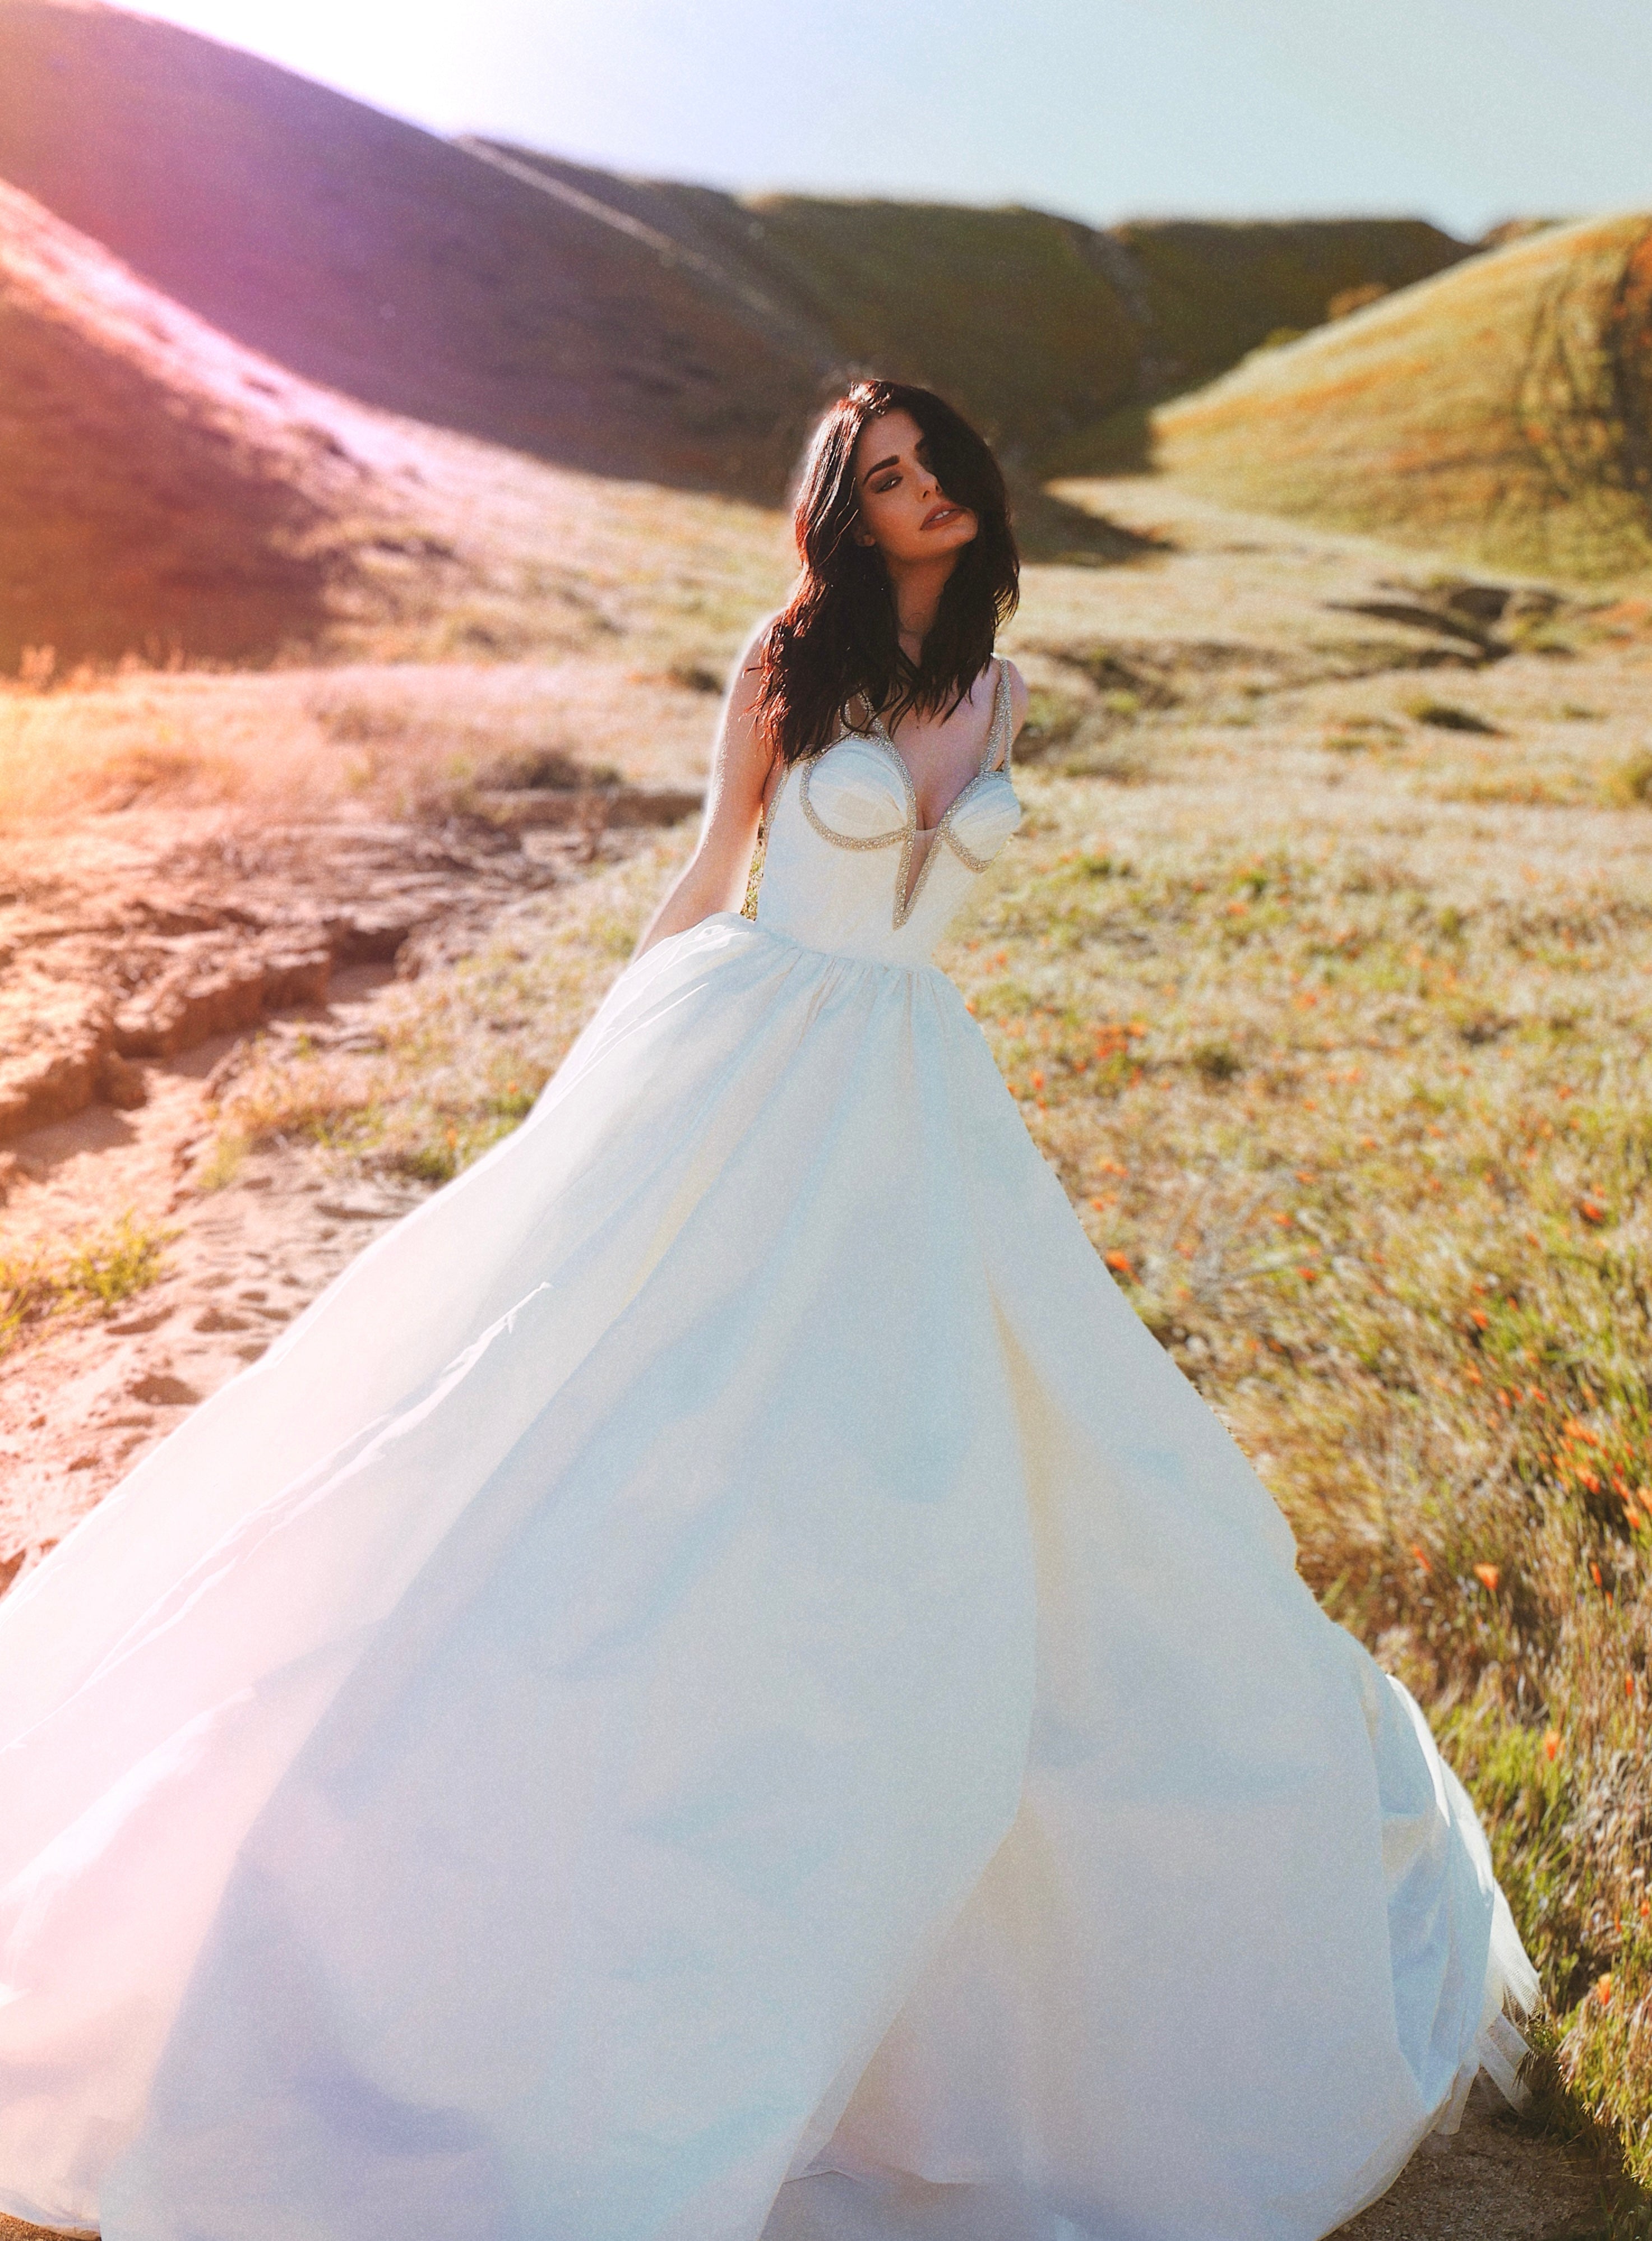 Lauren Elaine silk taffeta corset ball gown wedding dress in off white with crystal details.